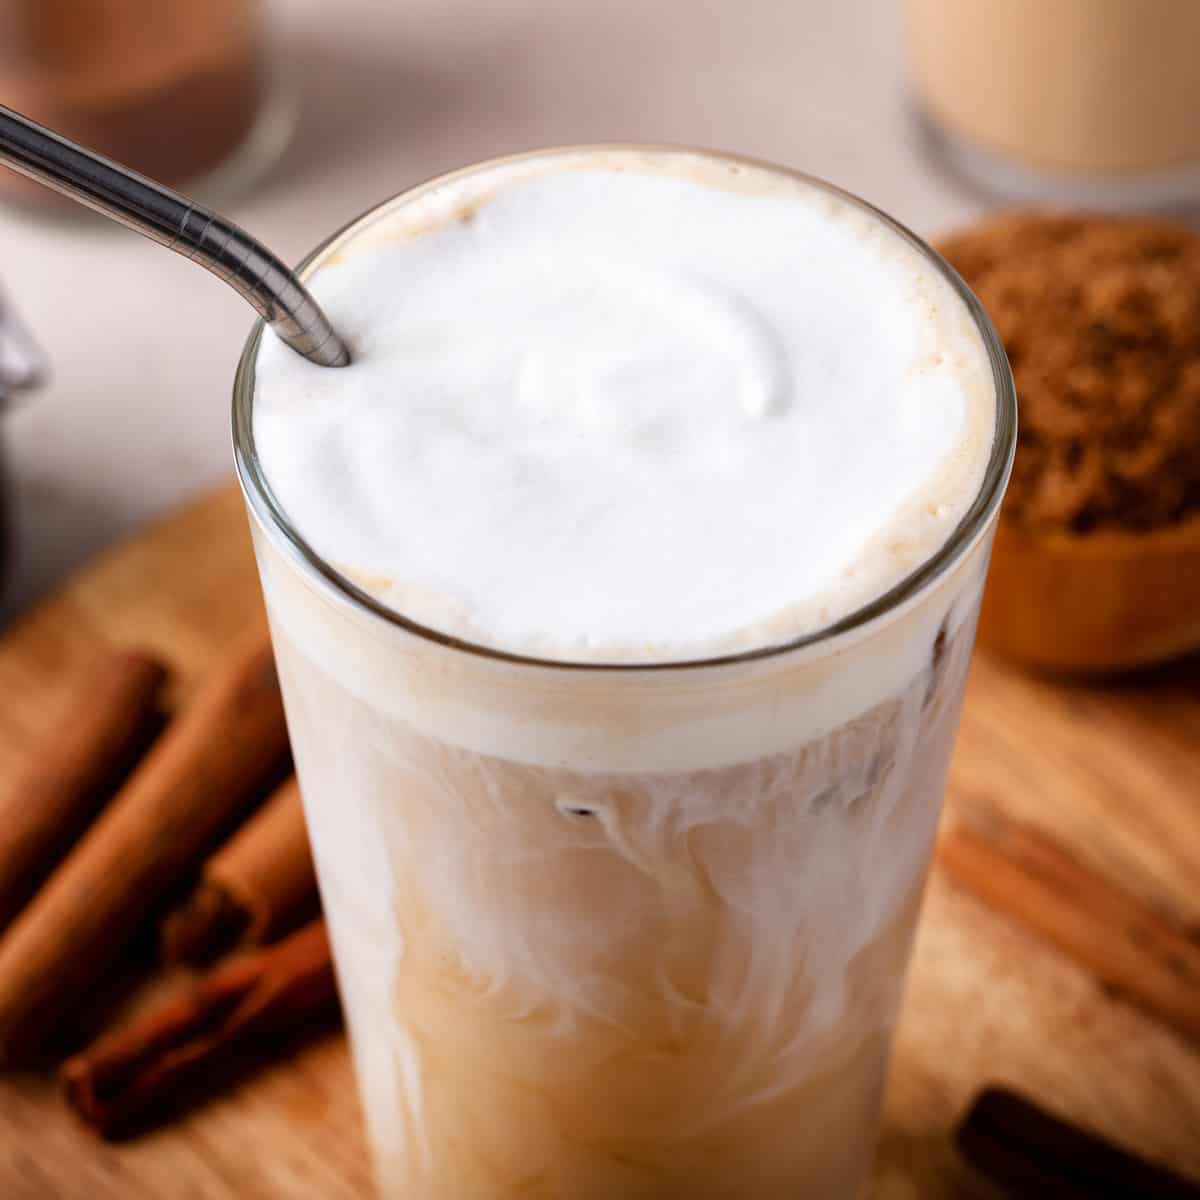 Vanilla Sweet Cream Cold Foam (A Copycat Starbucks Recipe) » Hummingbird  High